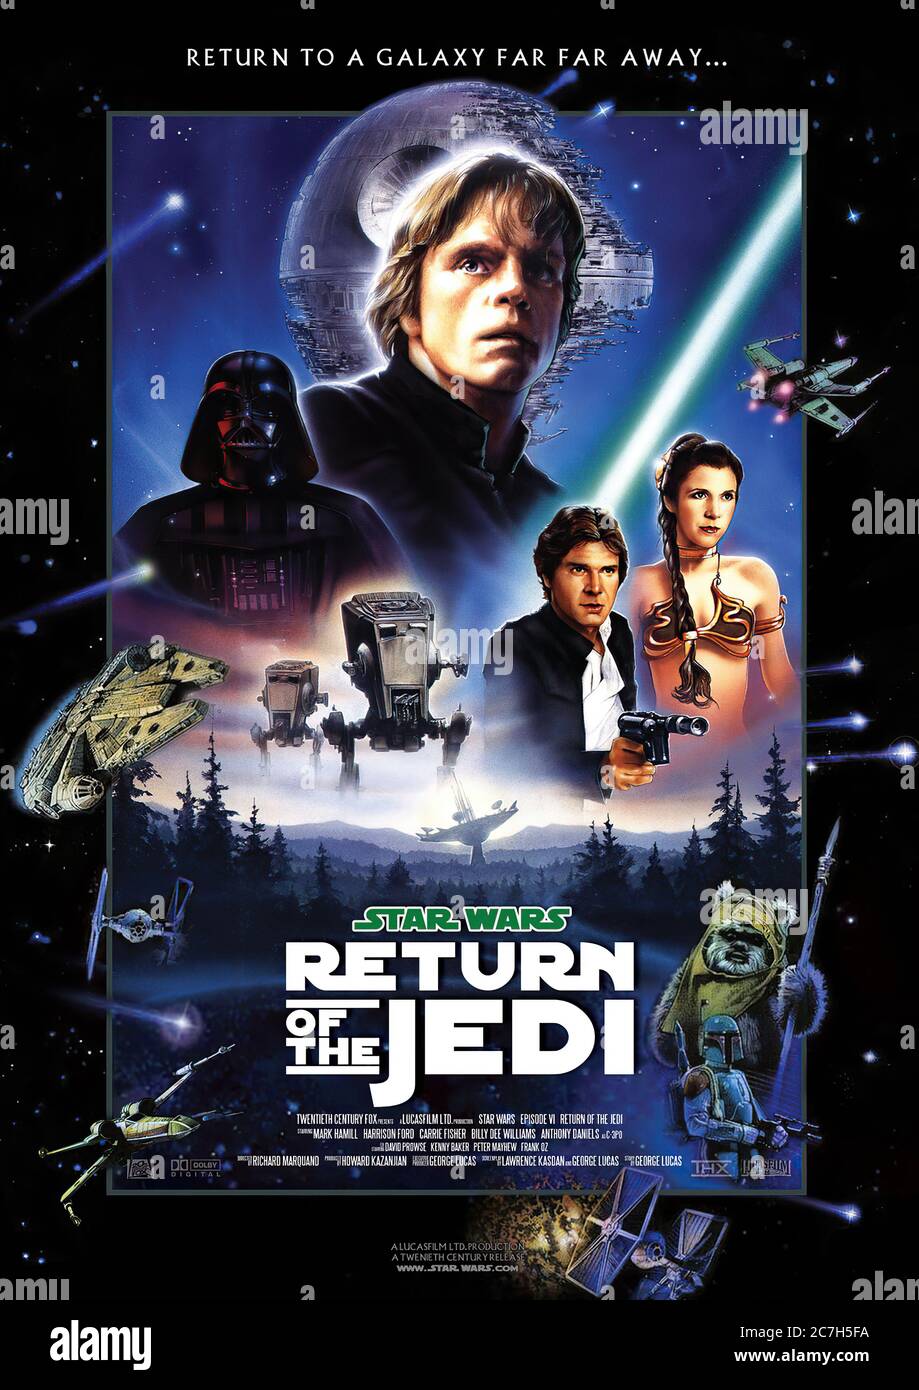 Return of the Jedi - Movie Poster Stock Photo